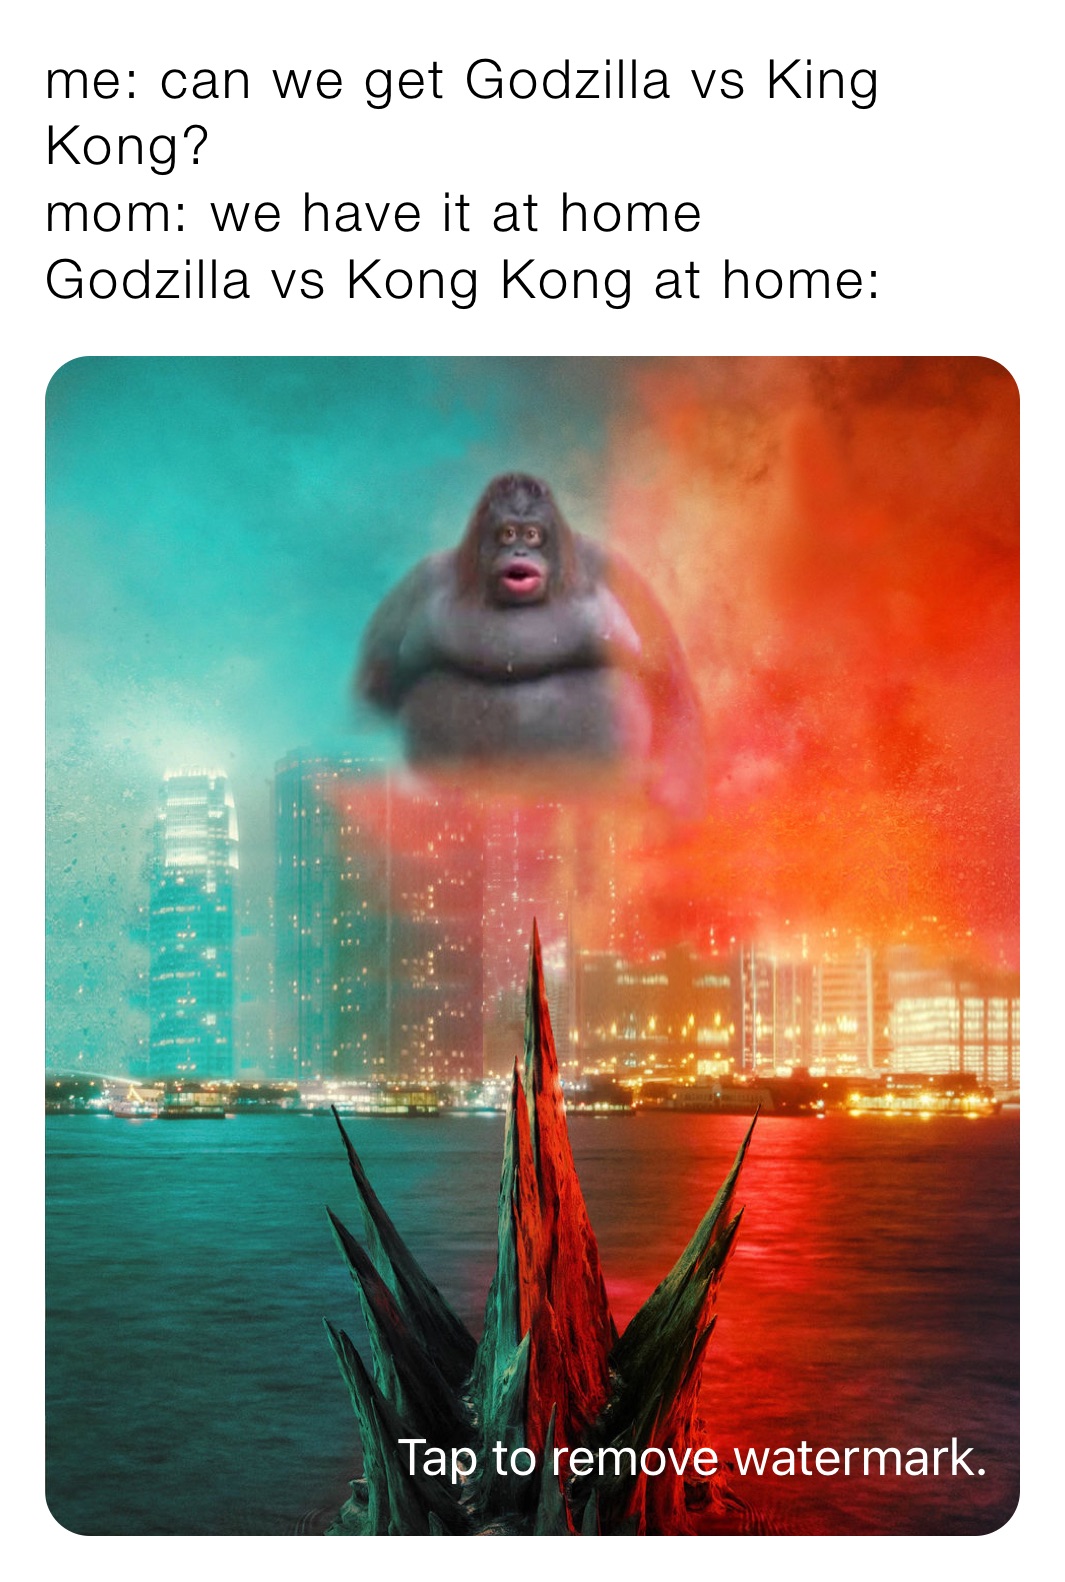 me: can we get Godzilla vs King Kong?
mom: we have it at home
Godzilla vs Kong Kong at home: